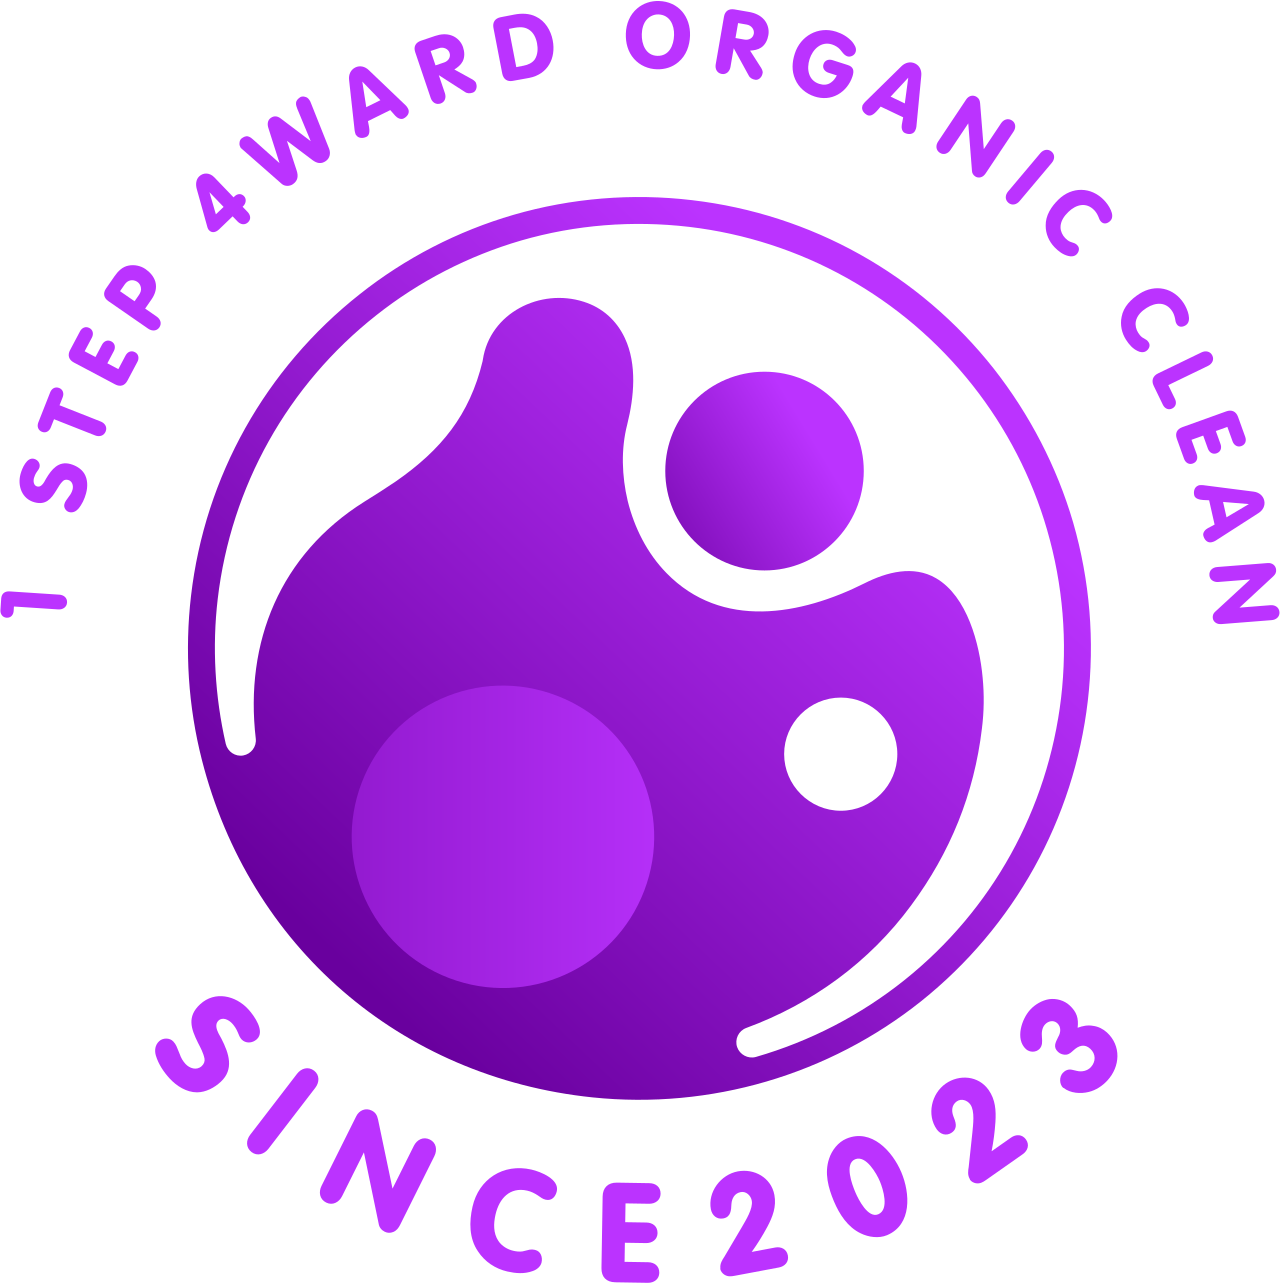 1 STEP 4WARD ORGANIC CLEAN's logo